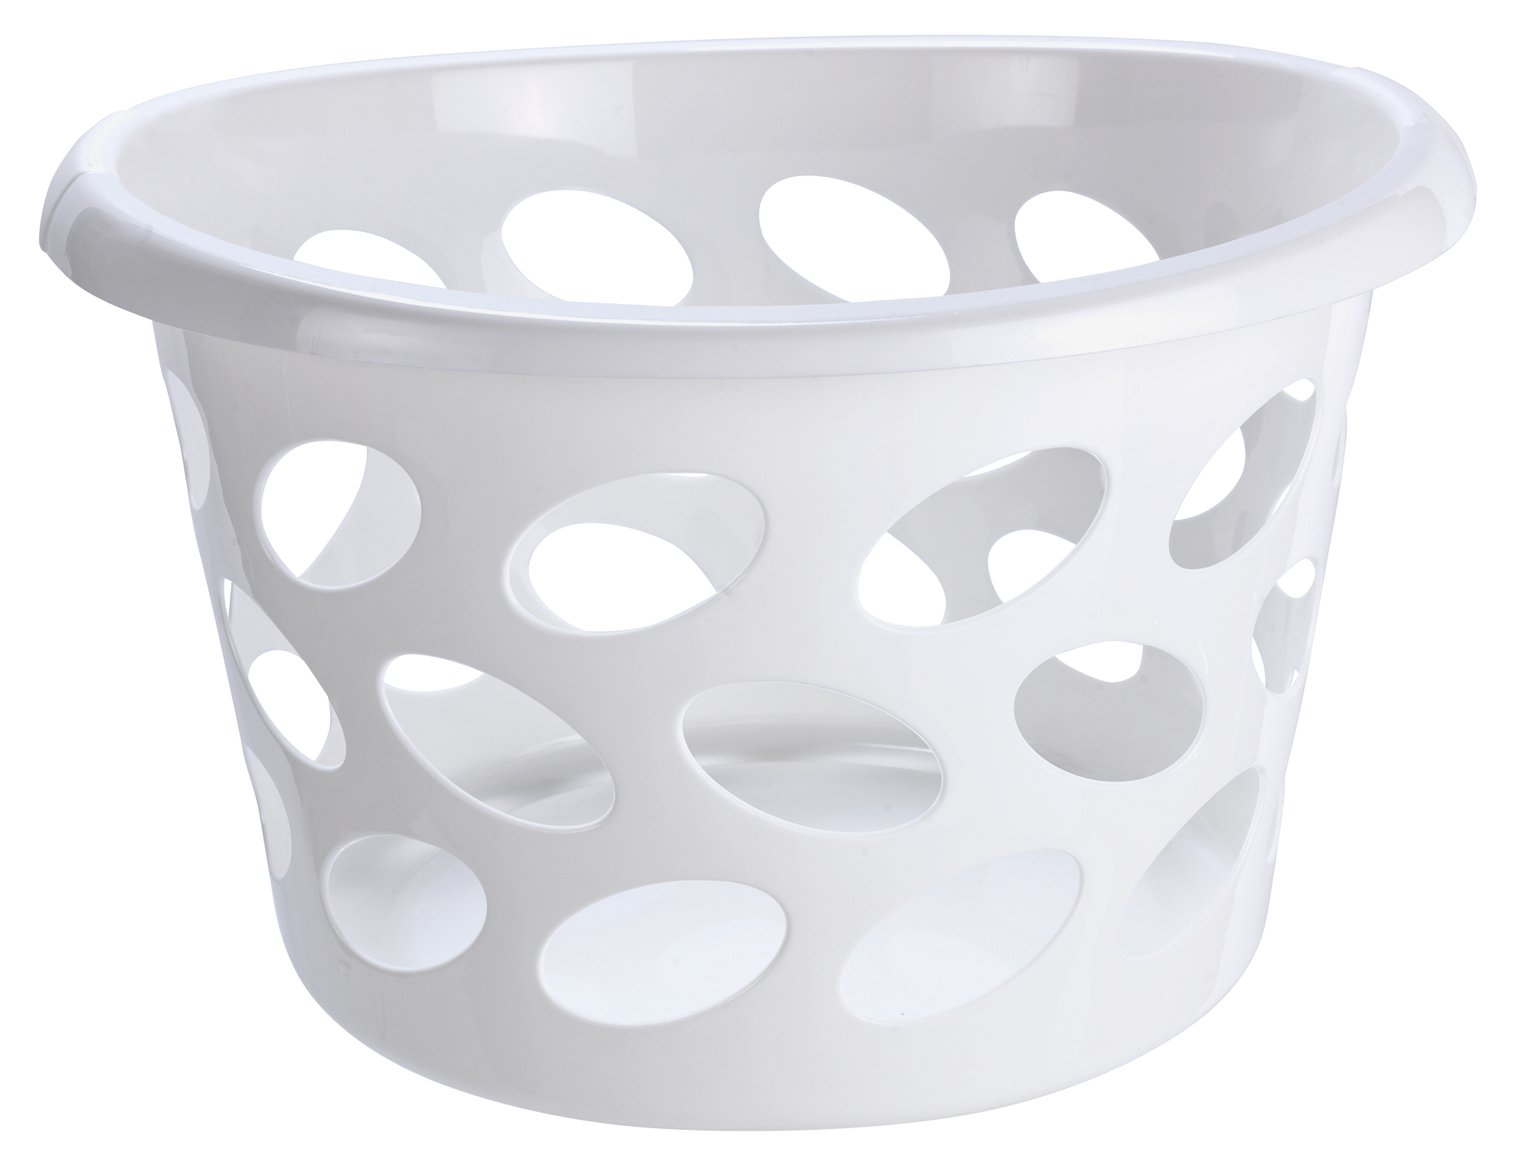 Argos Home 30 Litre Round Laundry Basket review